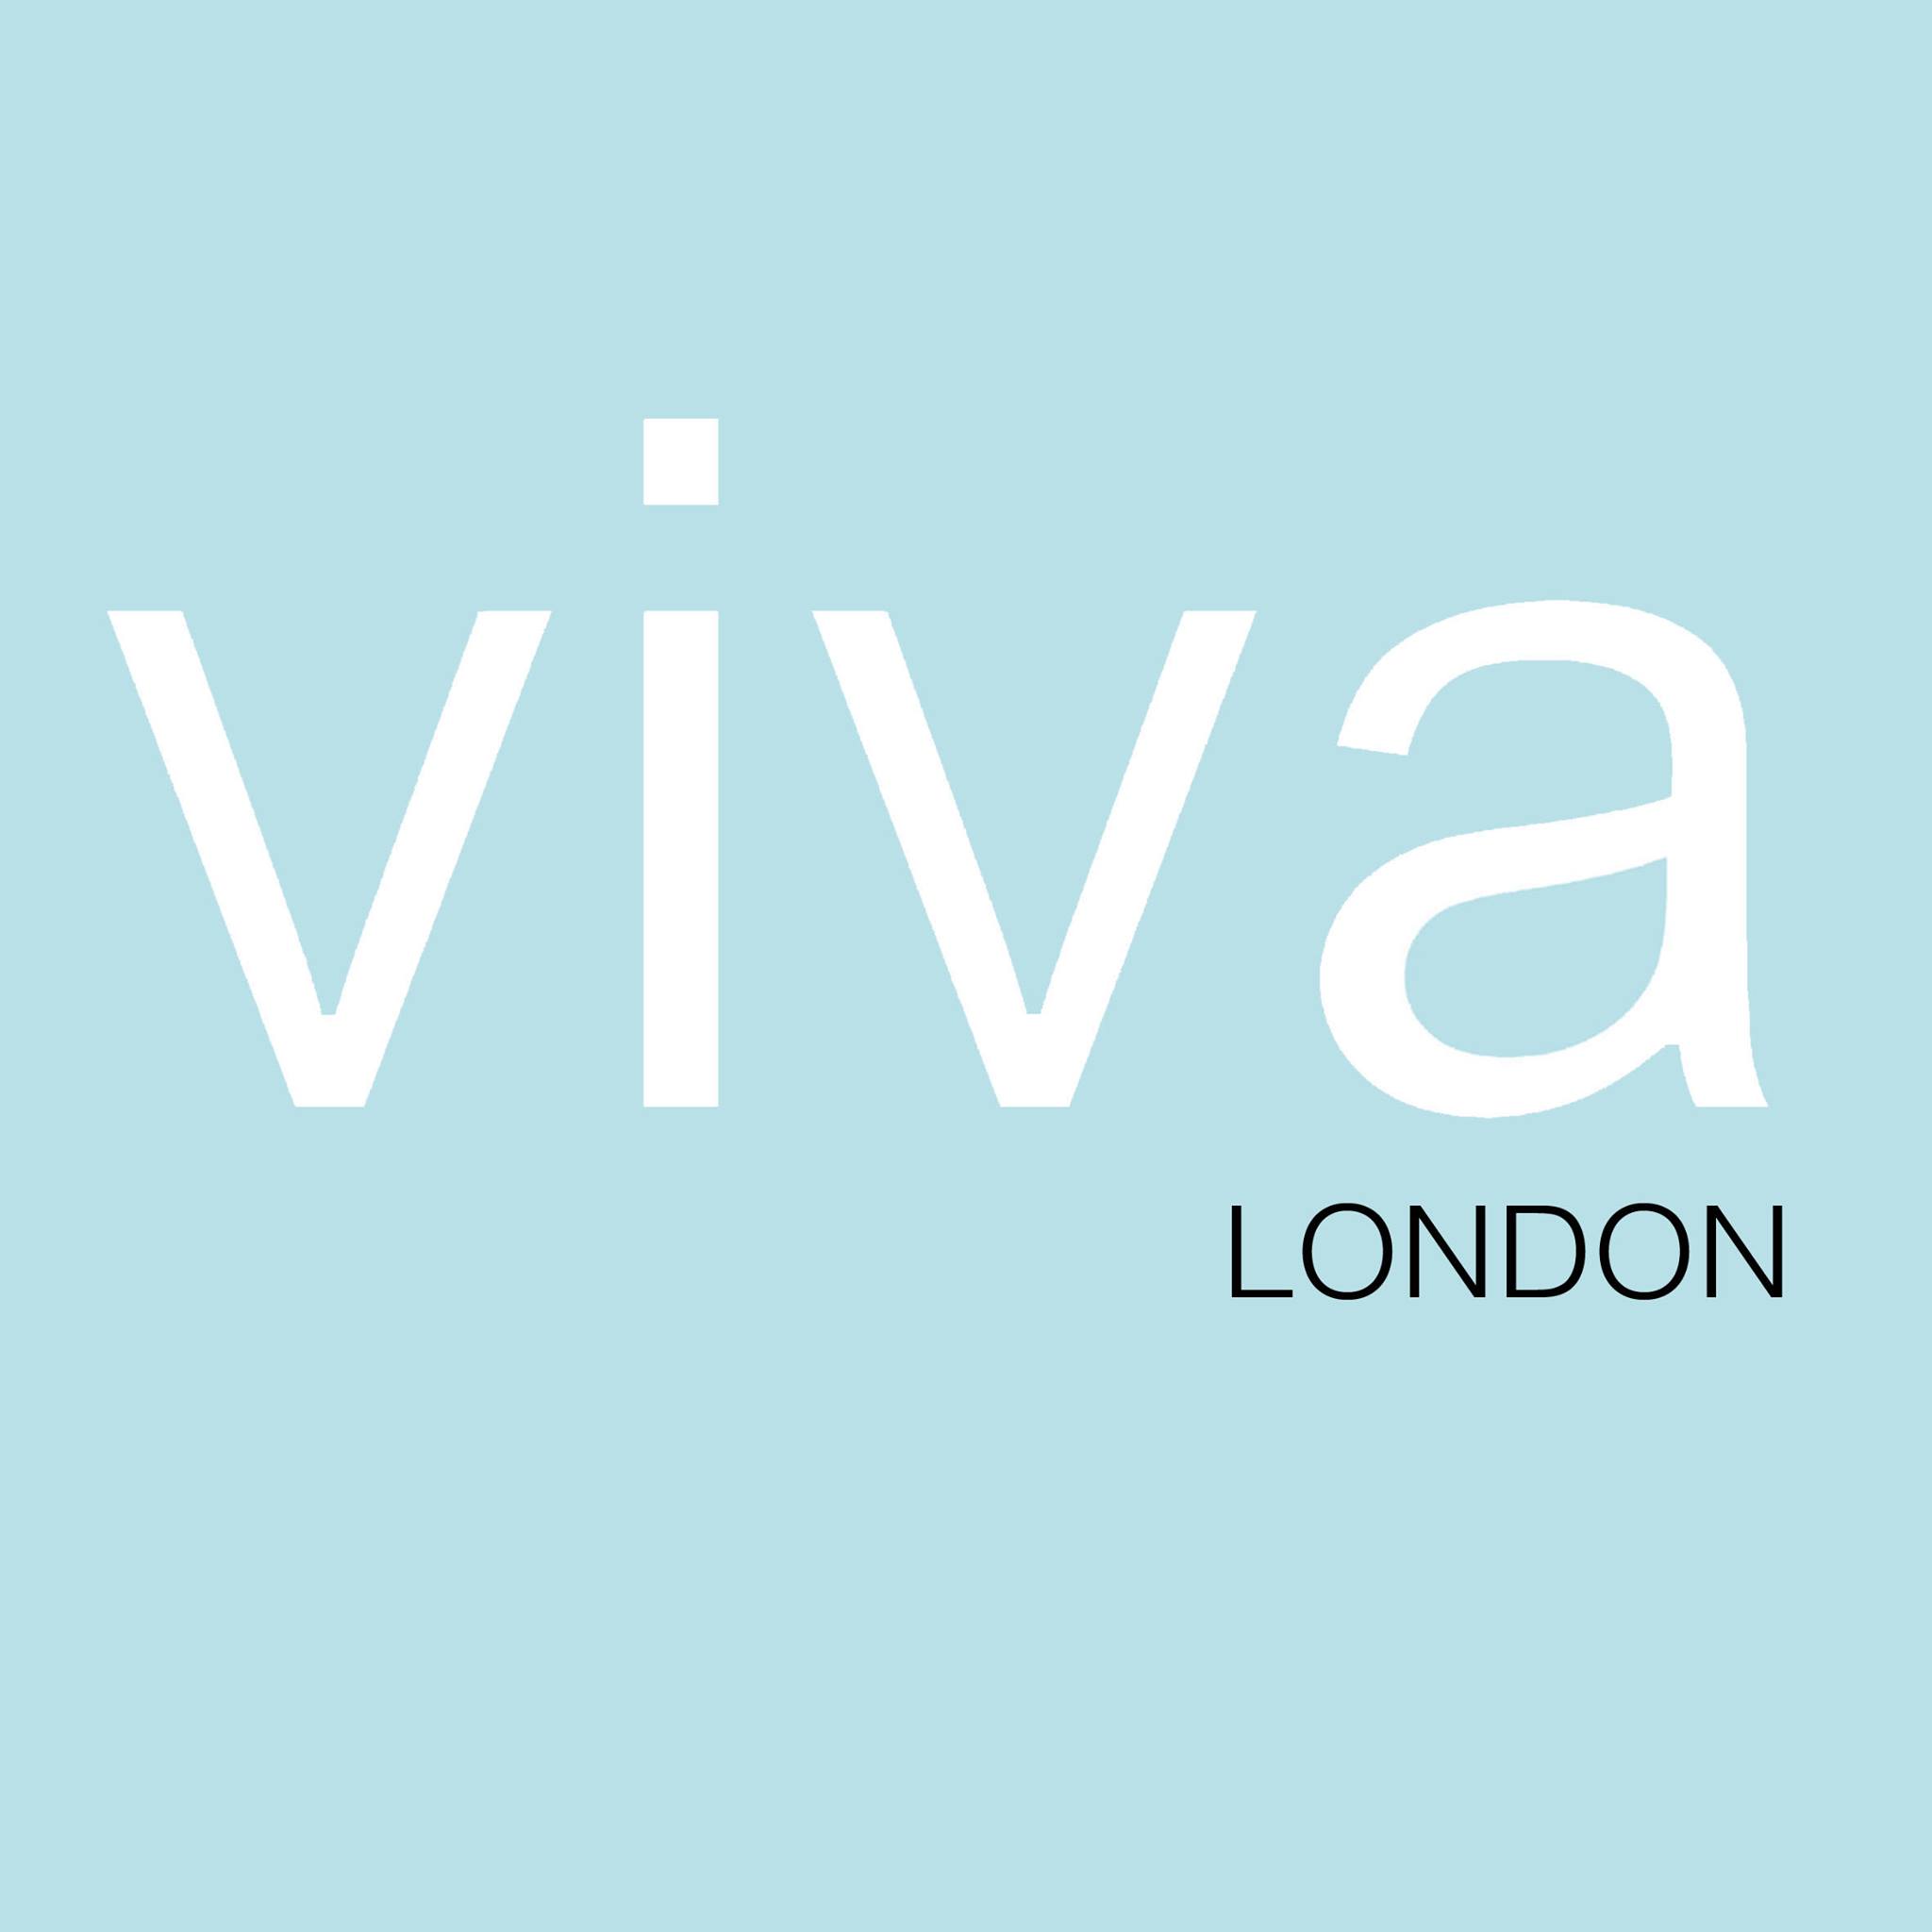 Viva London